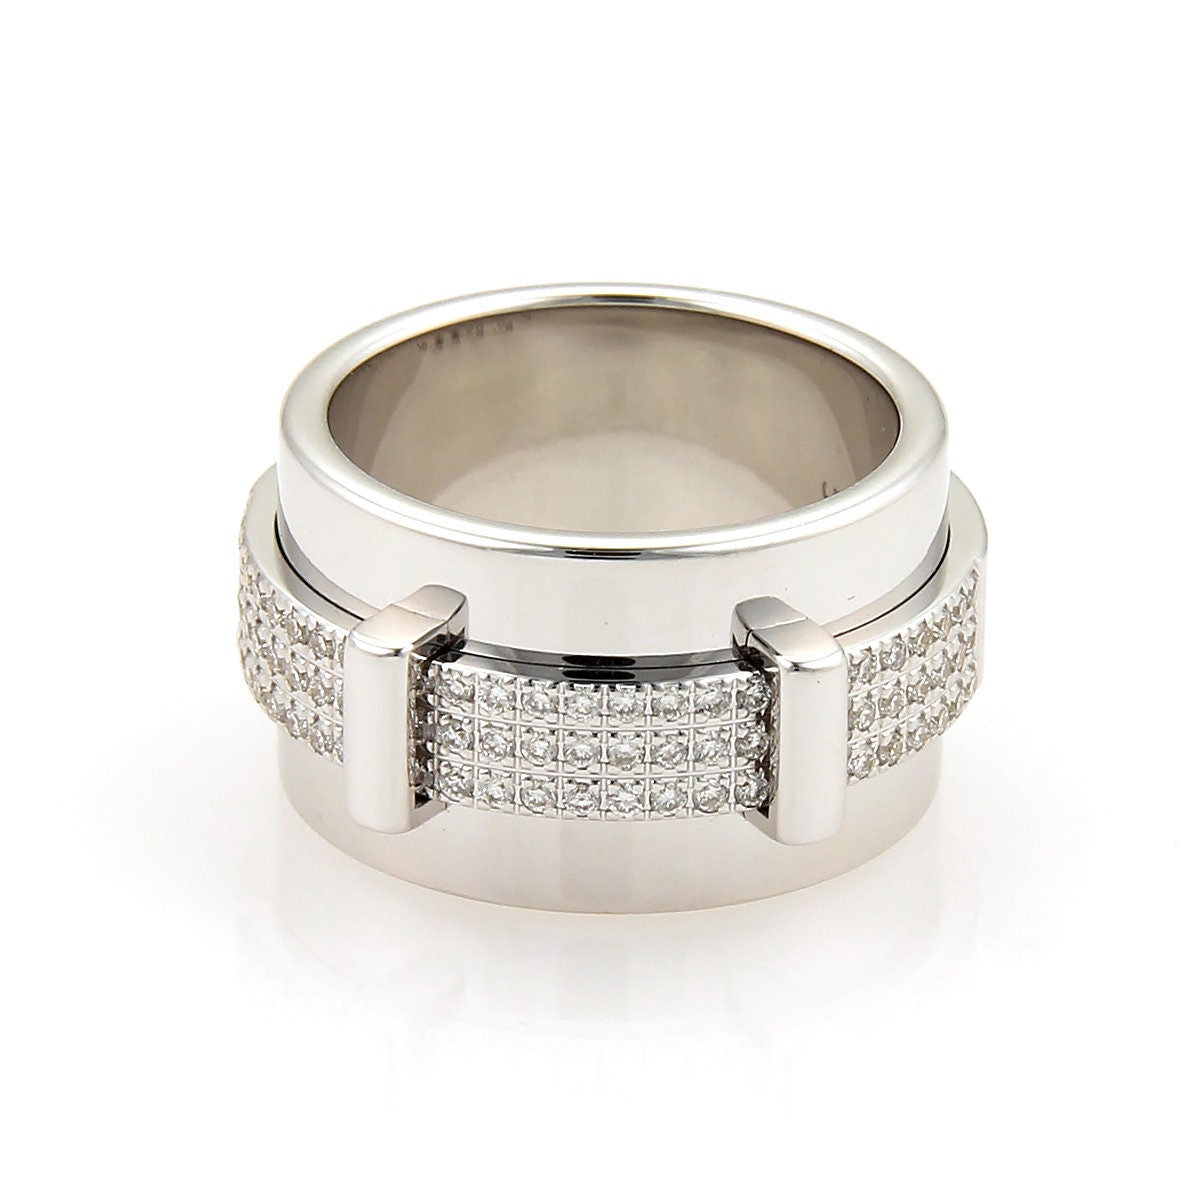 10 luxury jewelry designers for fabulous engagement rings | Blog  Purentonline